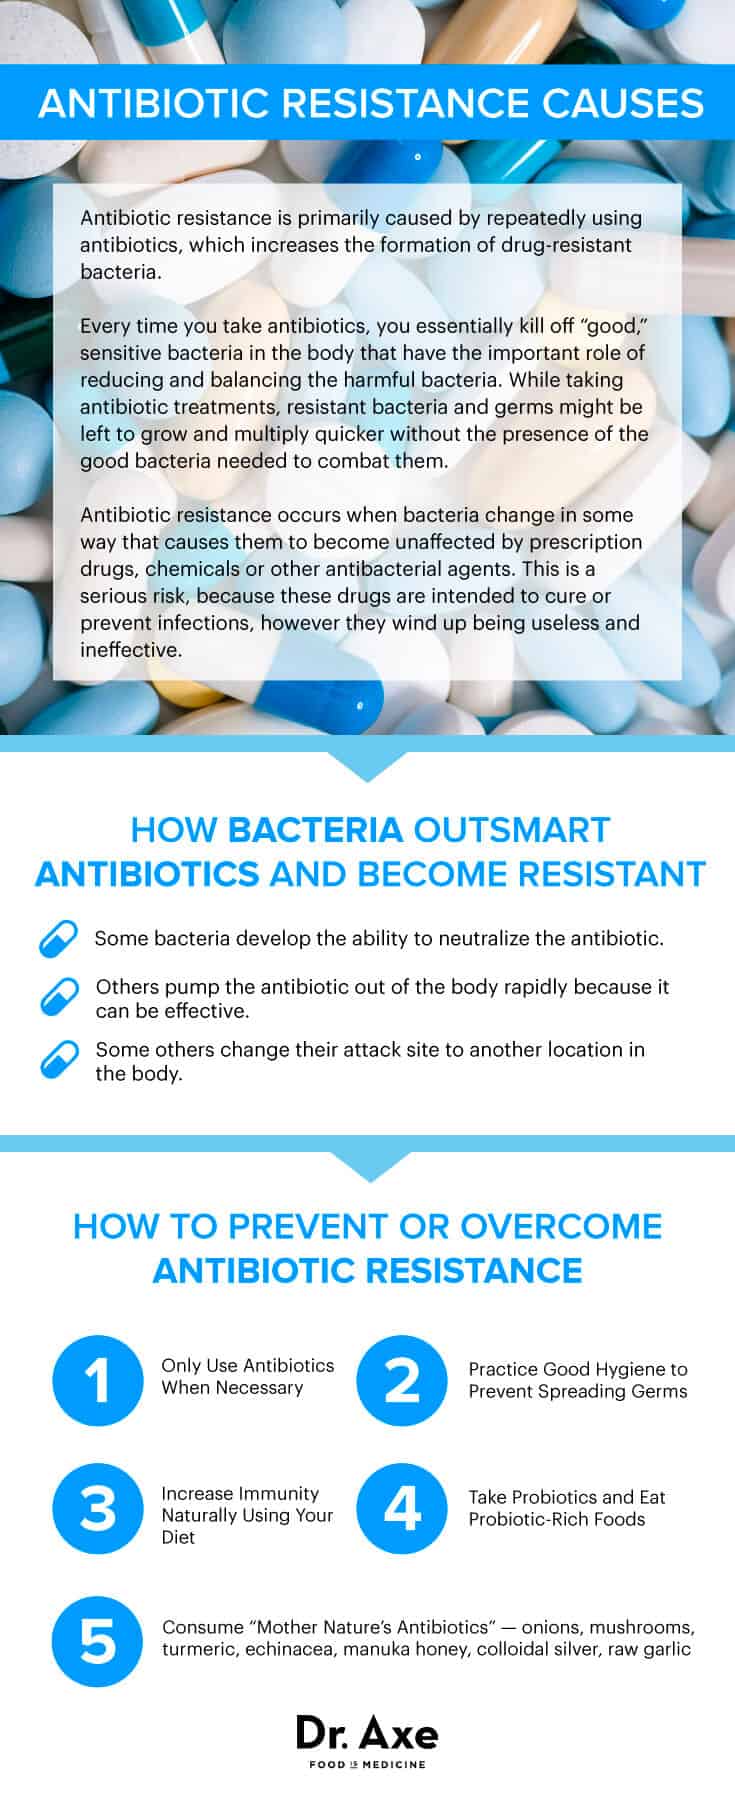 The health threat of antibiotic resistance essay